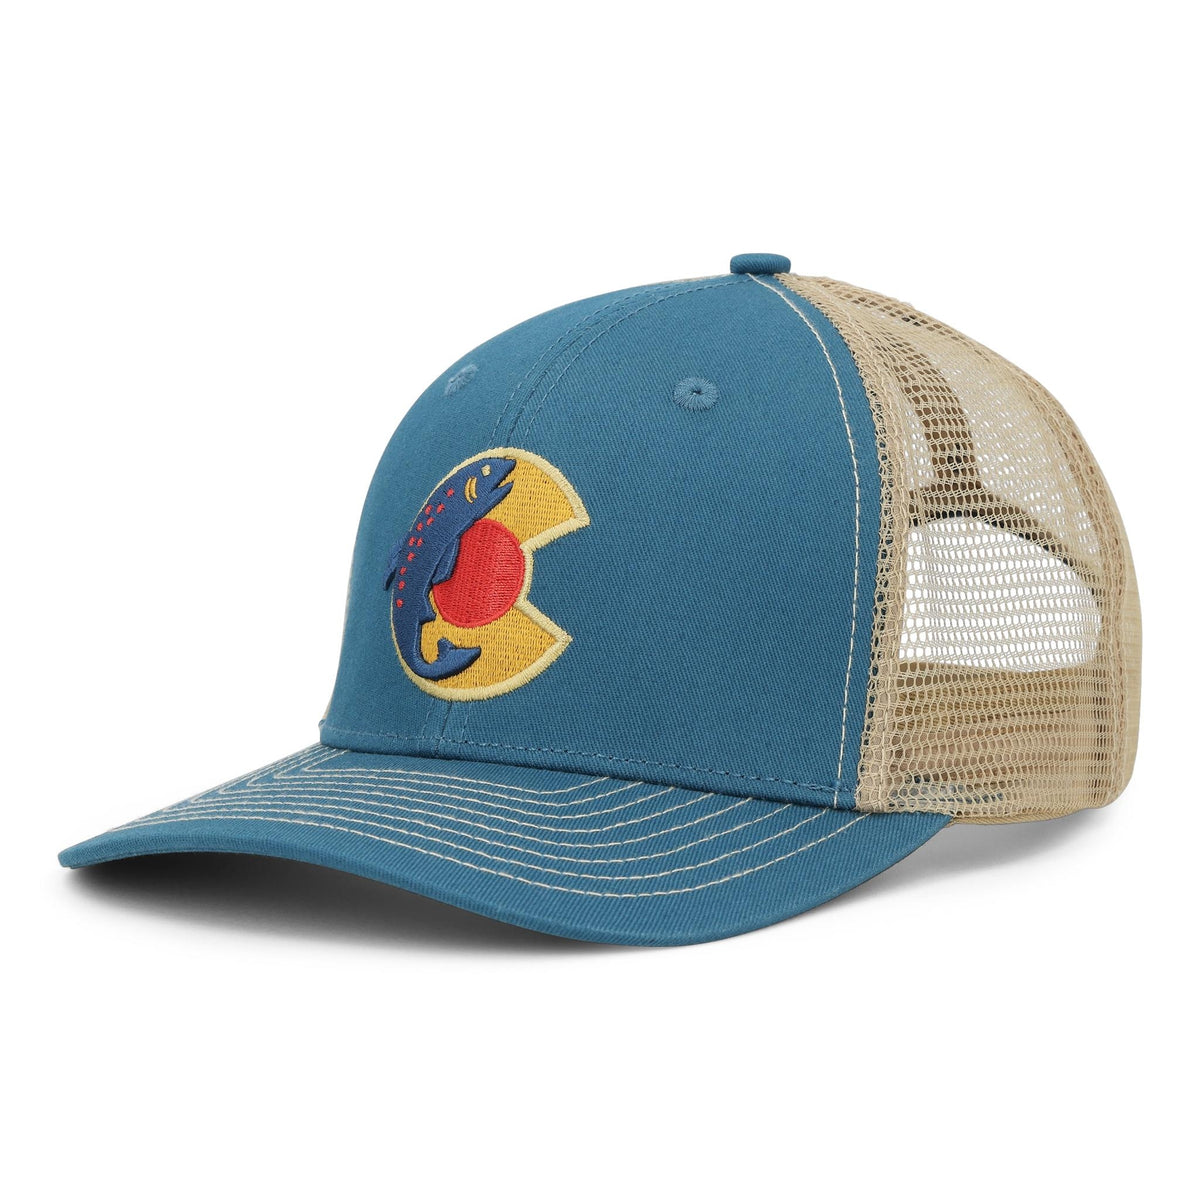 Colorado Wild Trout Trucker Hat